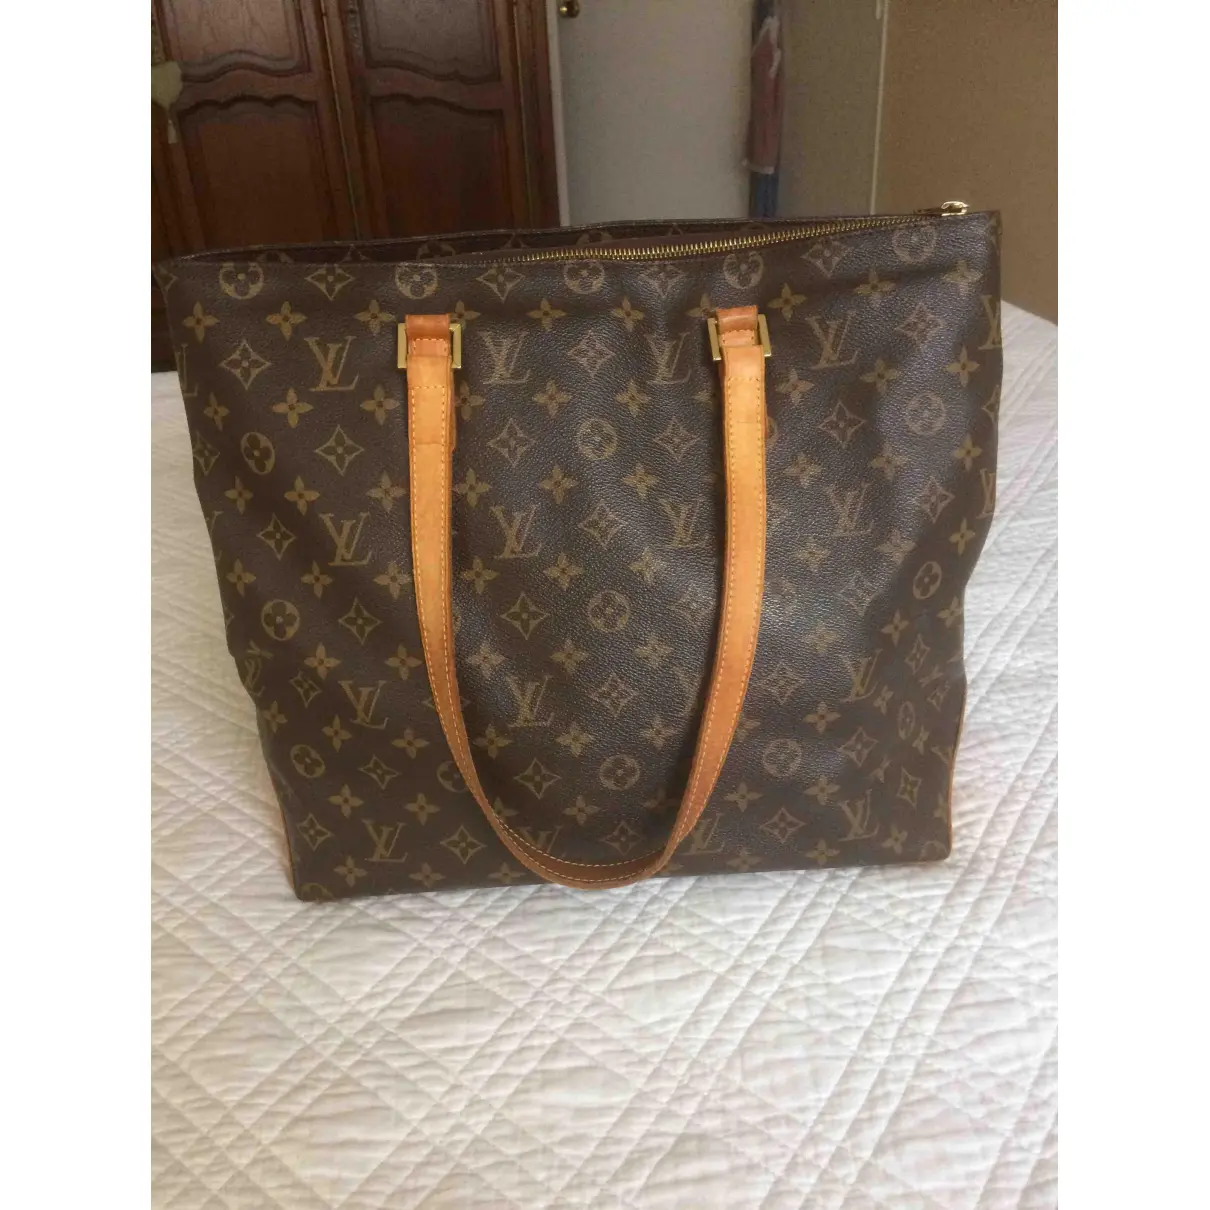 Buy Louis Vuitton Luco cloth handbag online